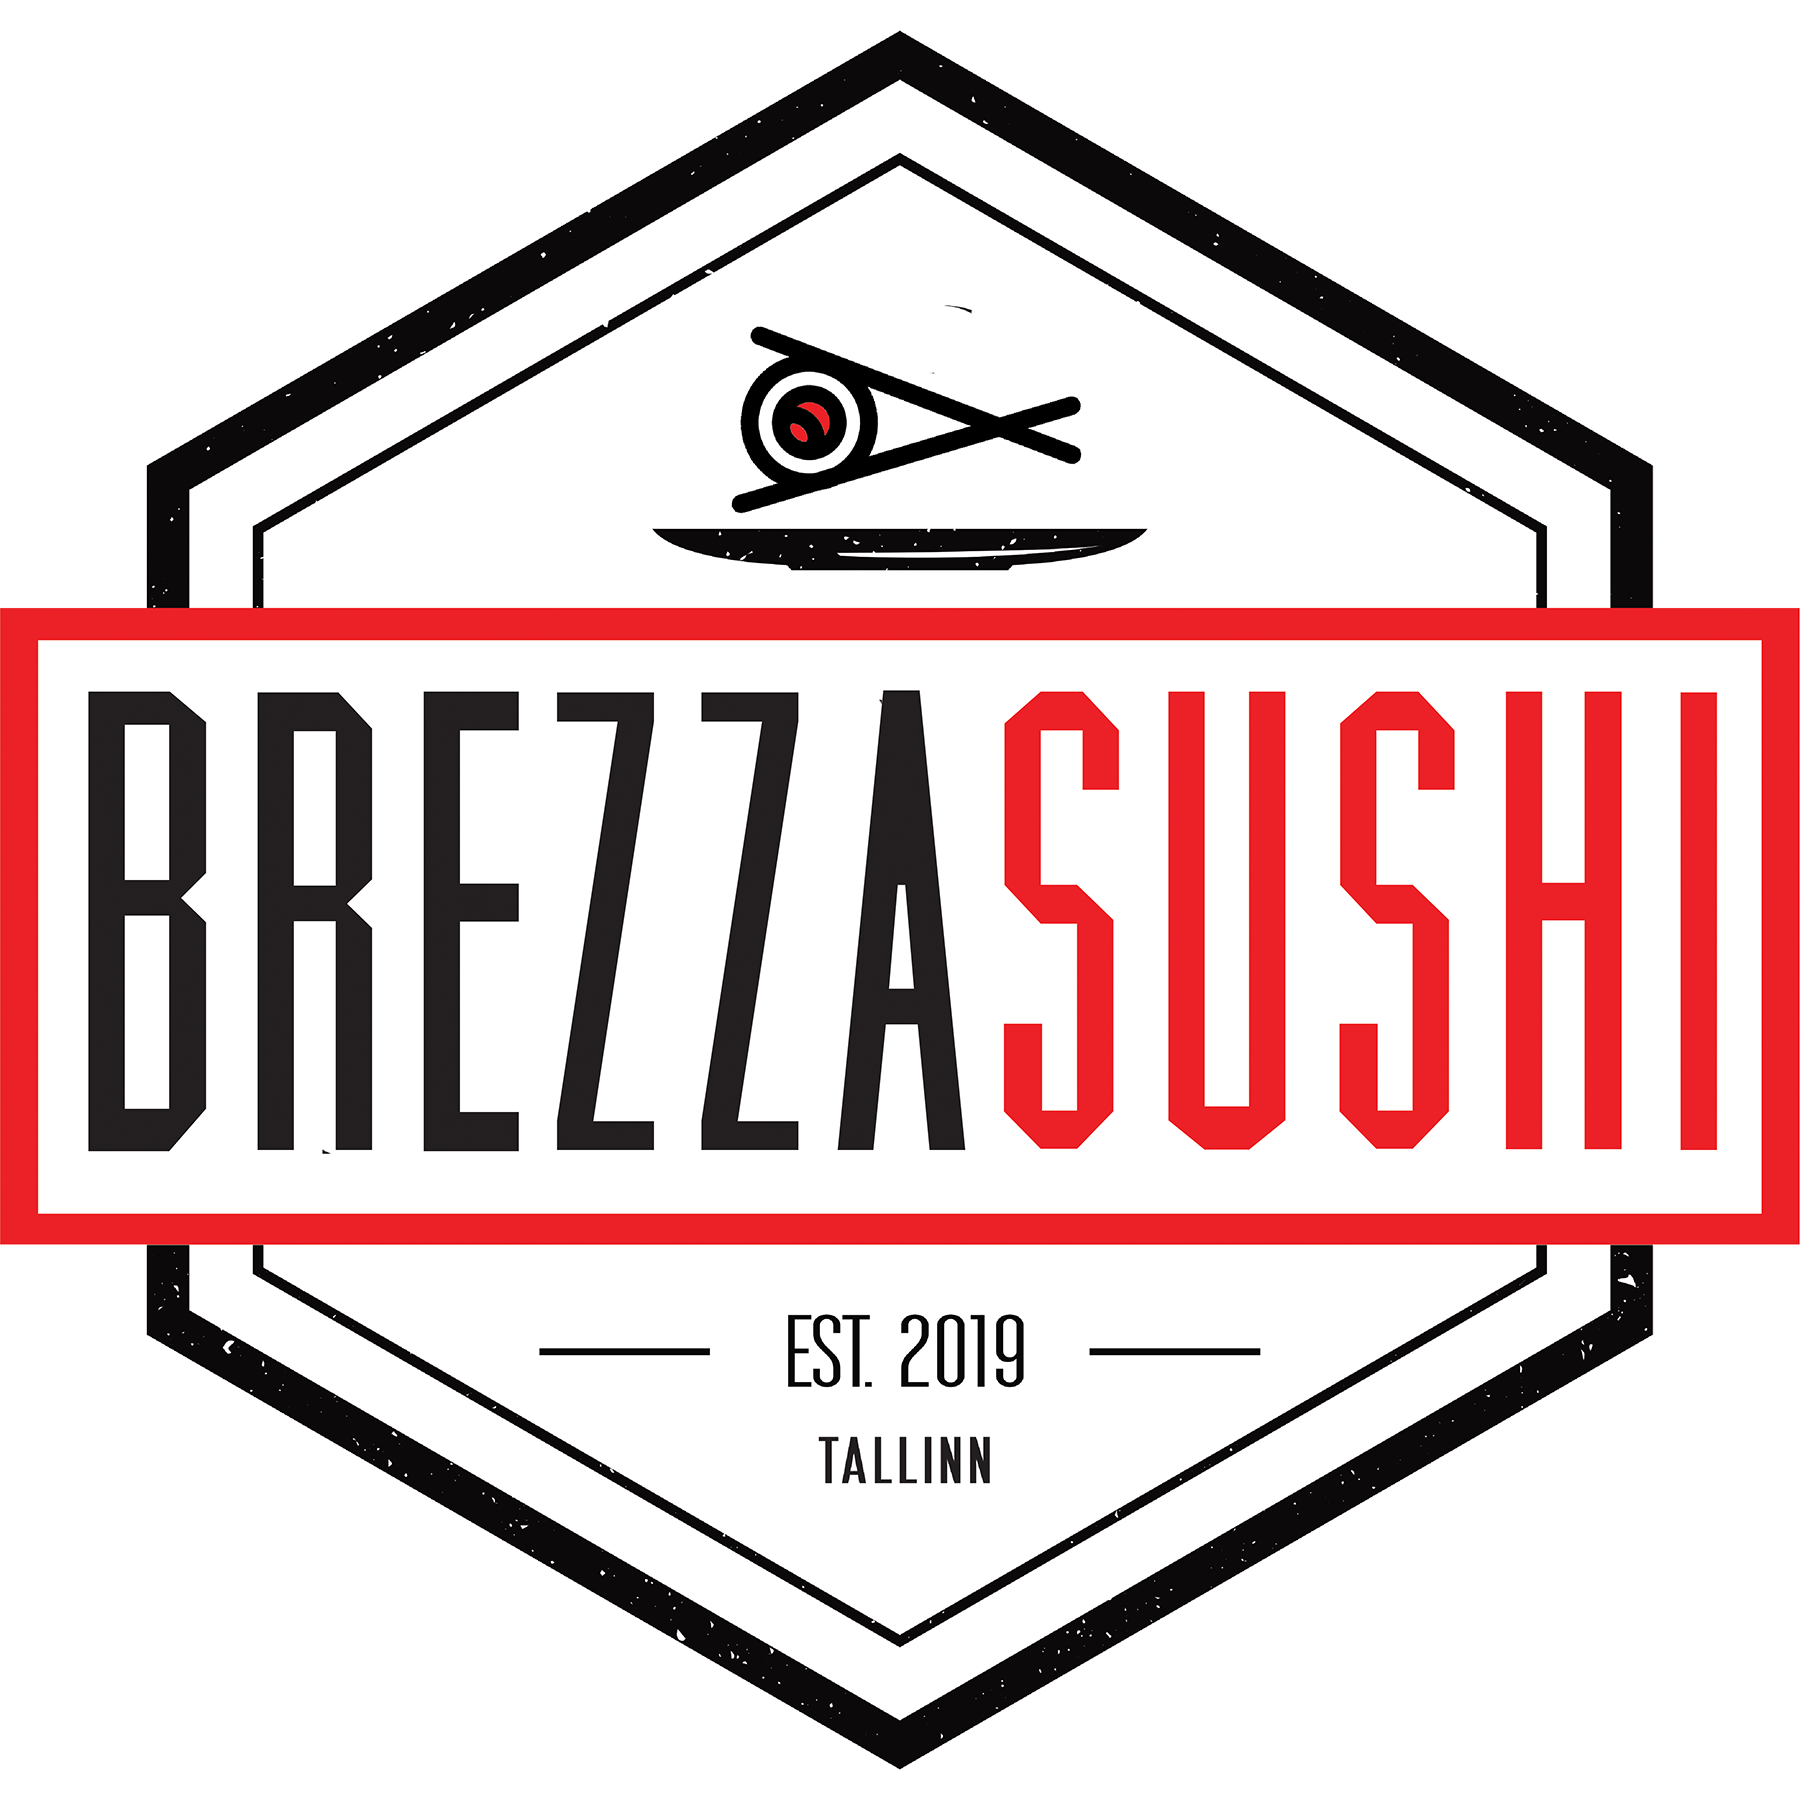 Brezza Sushi